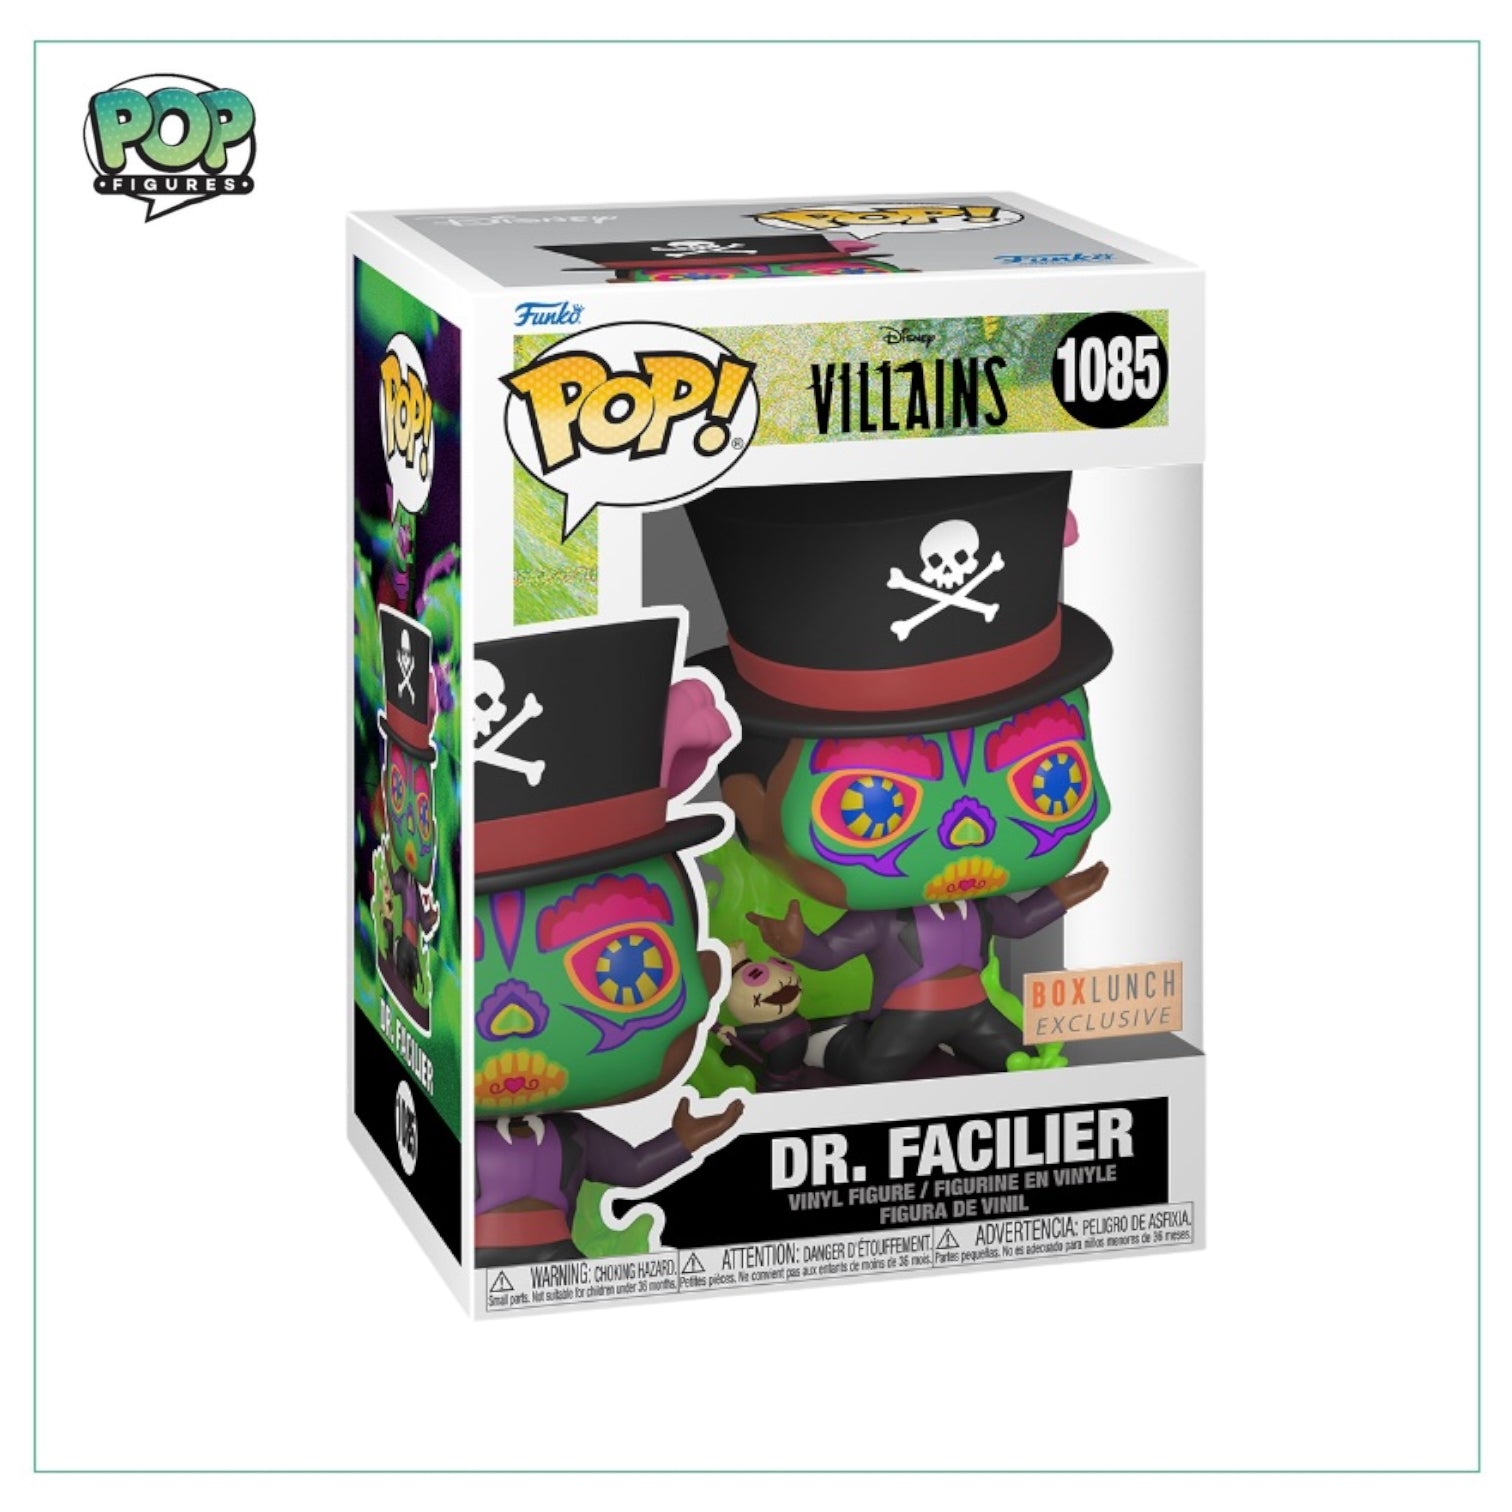 Dr. Facilier #1085 Funko Pop! - Disney Villains - BoxLunch Exclusive